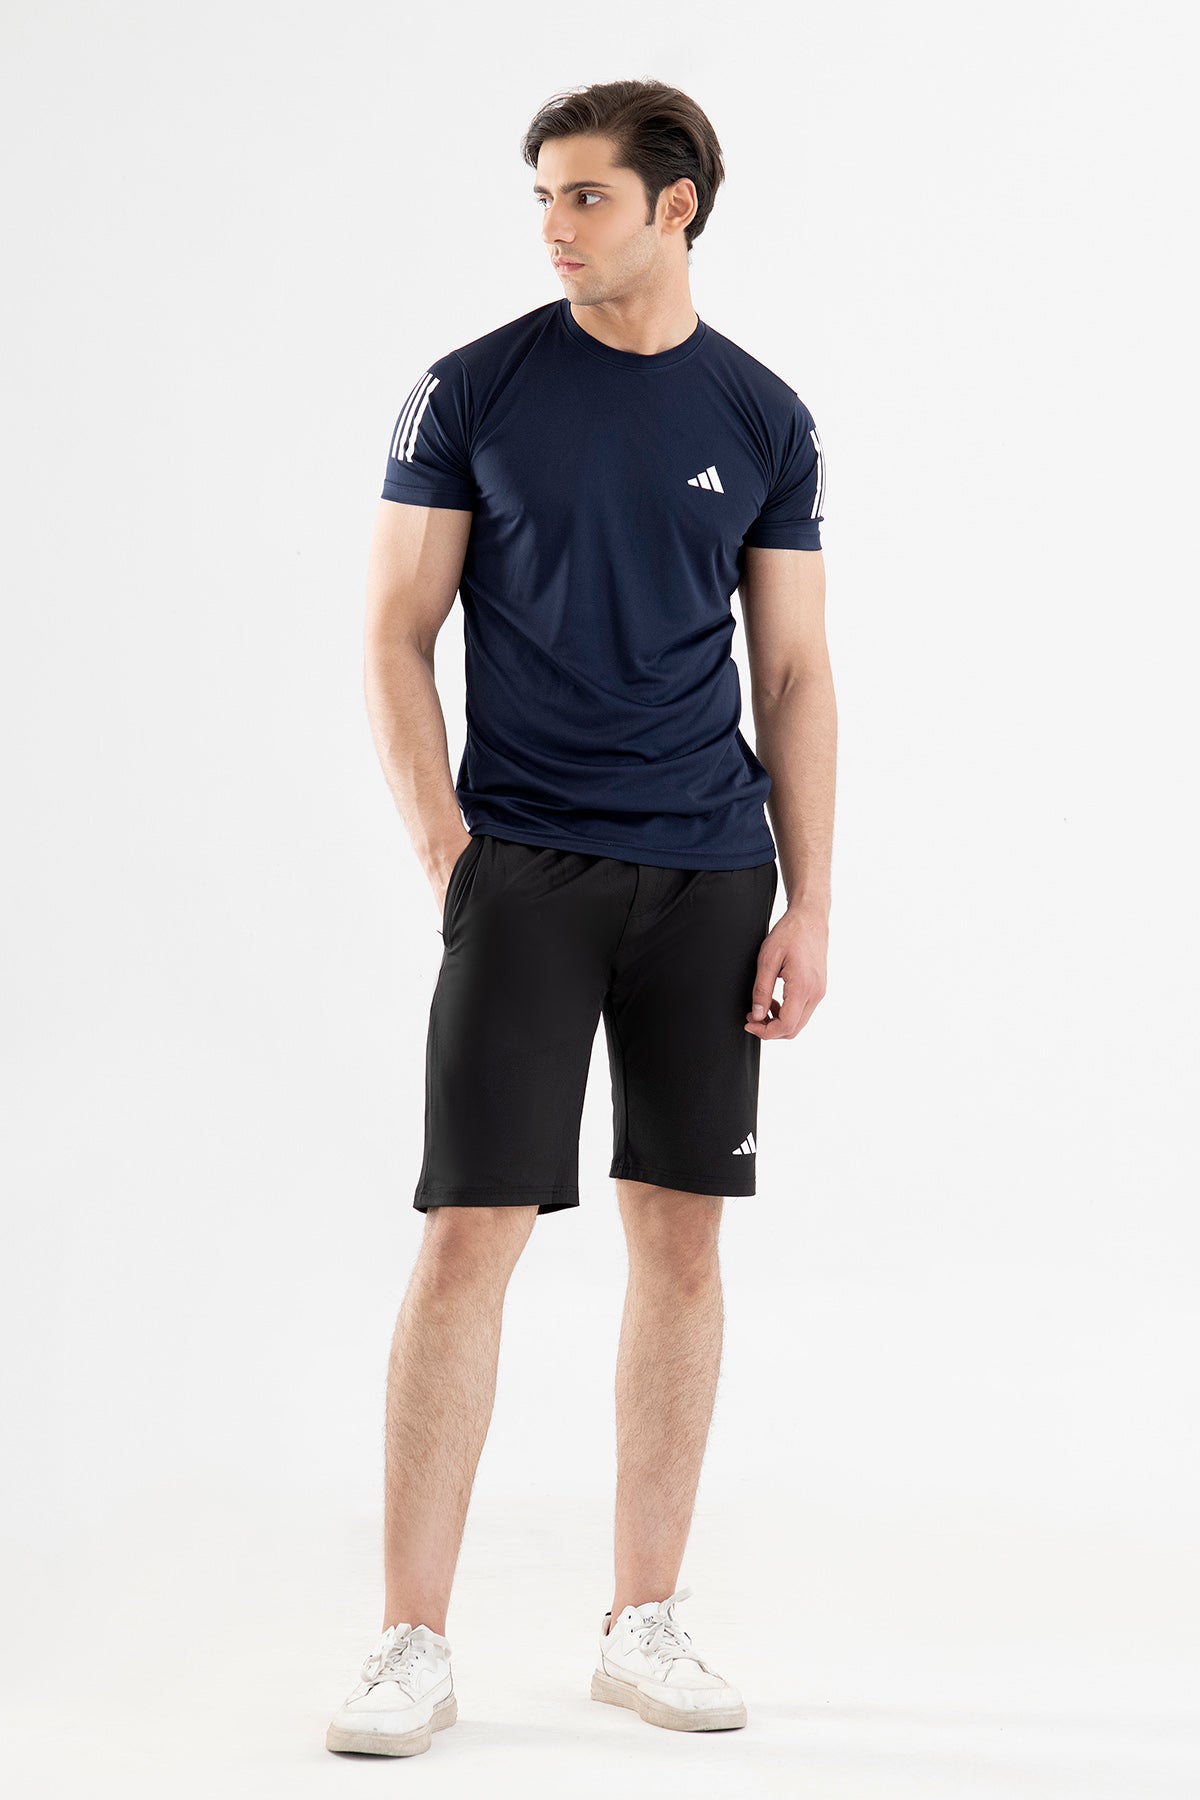 Adidas Black Dry-Fit shorts